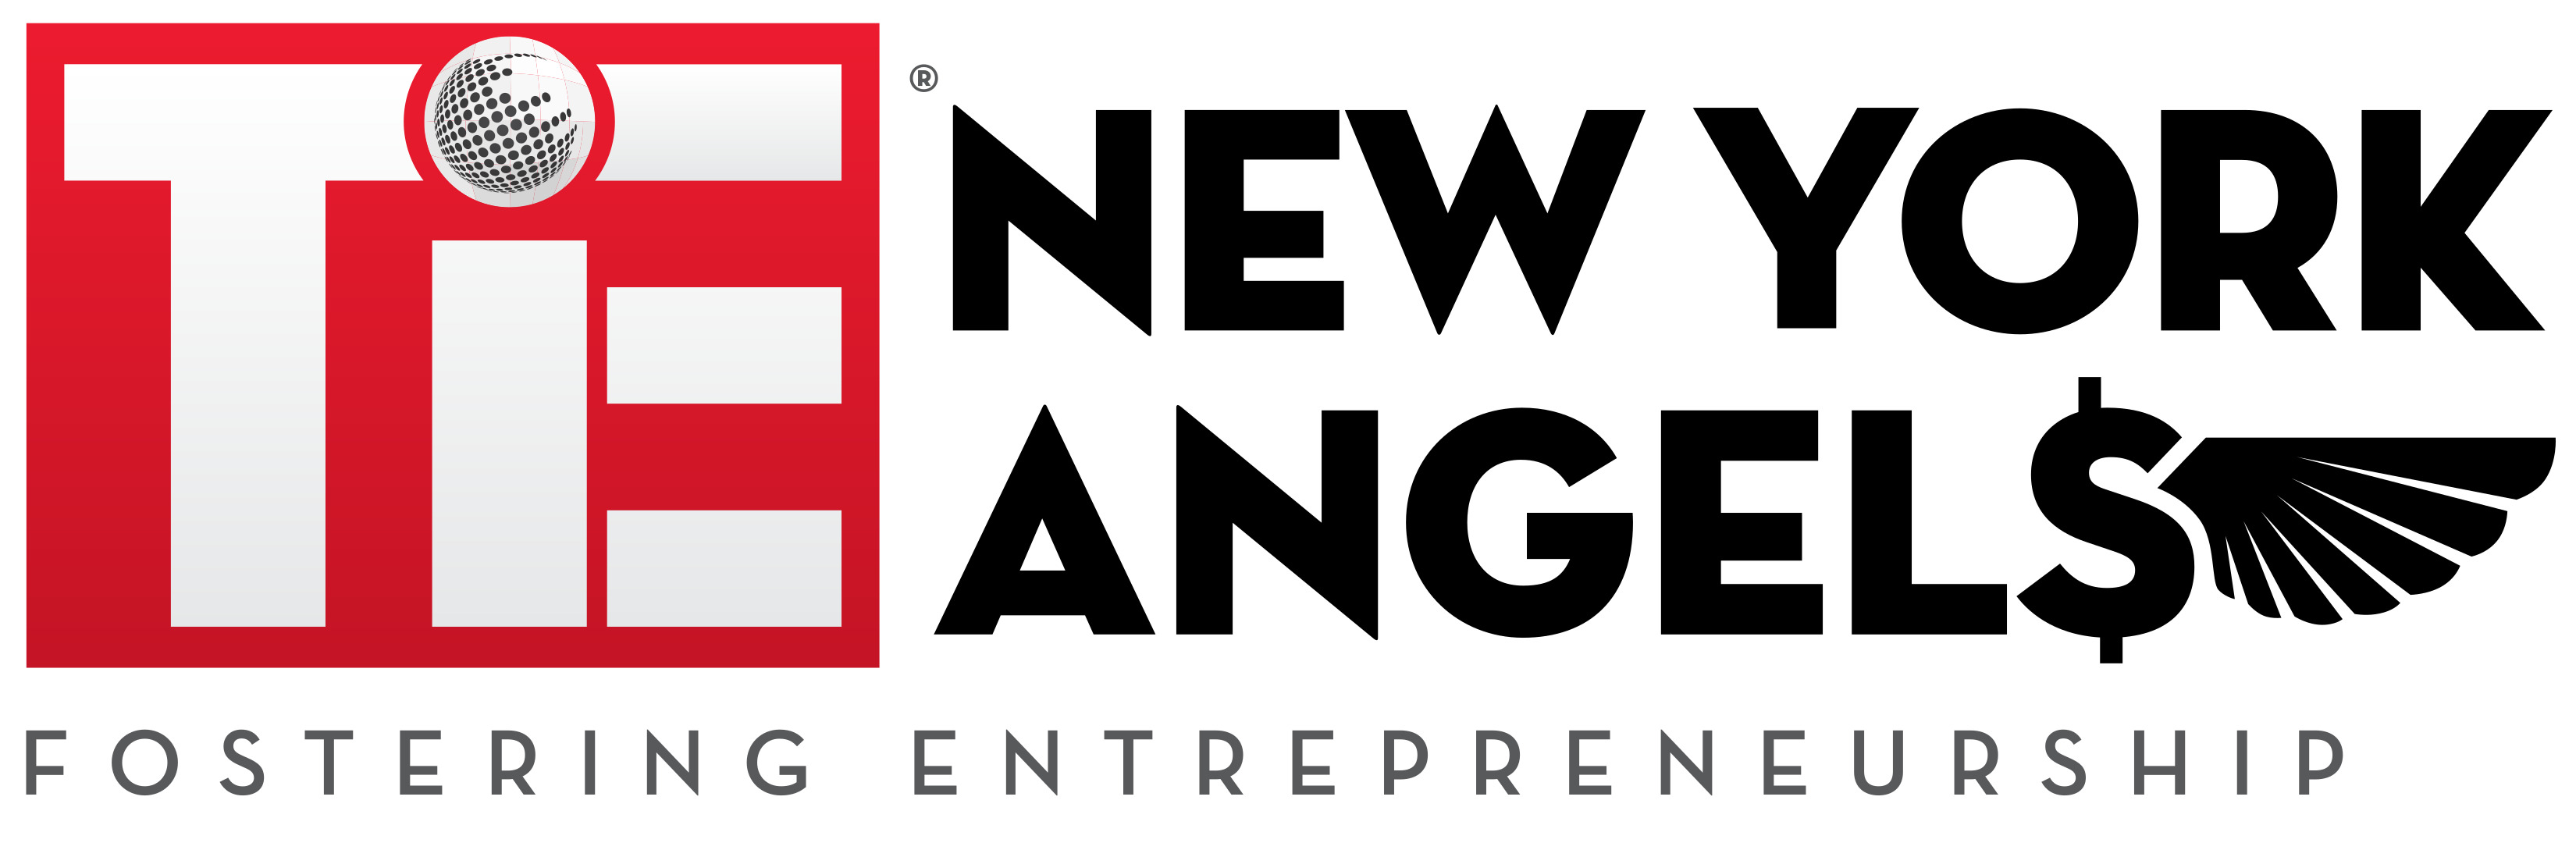 TiE New York Angels